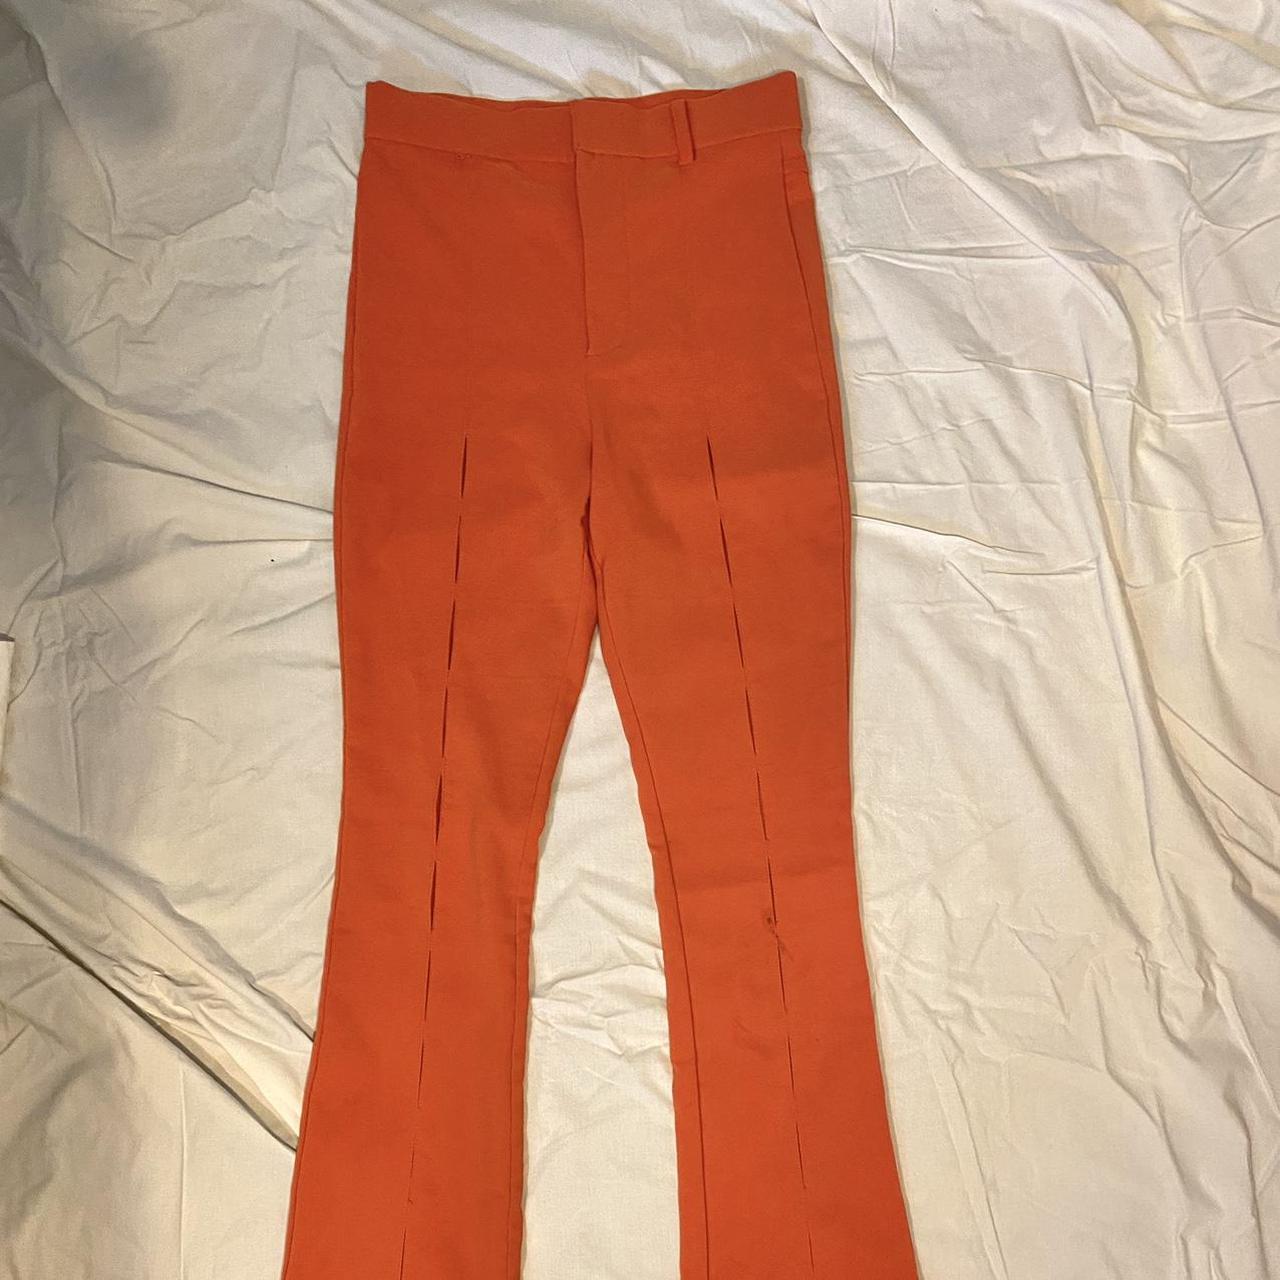 Zara Women Sailor Trousers UK Size 14 Orange Stretch Flared Leg | eBay